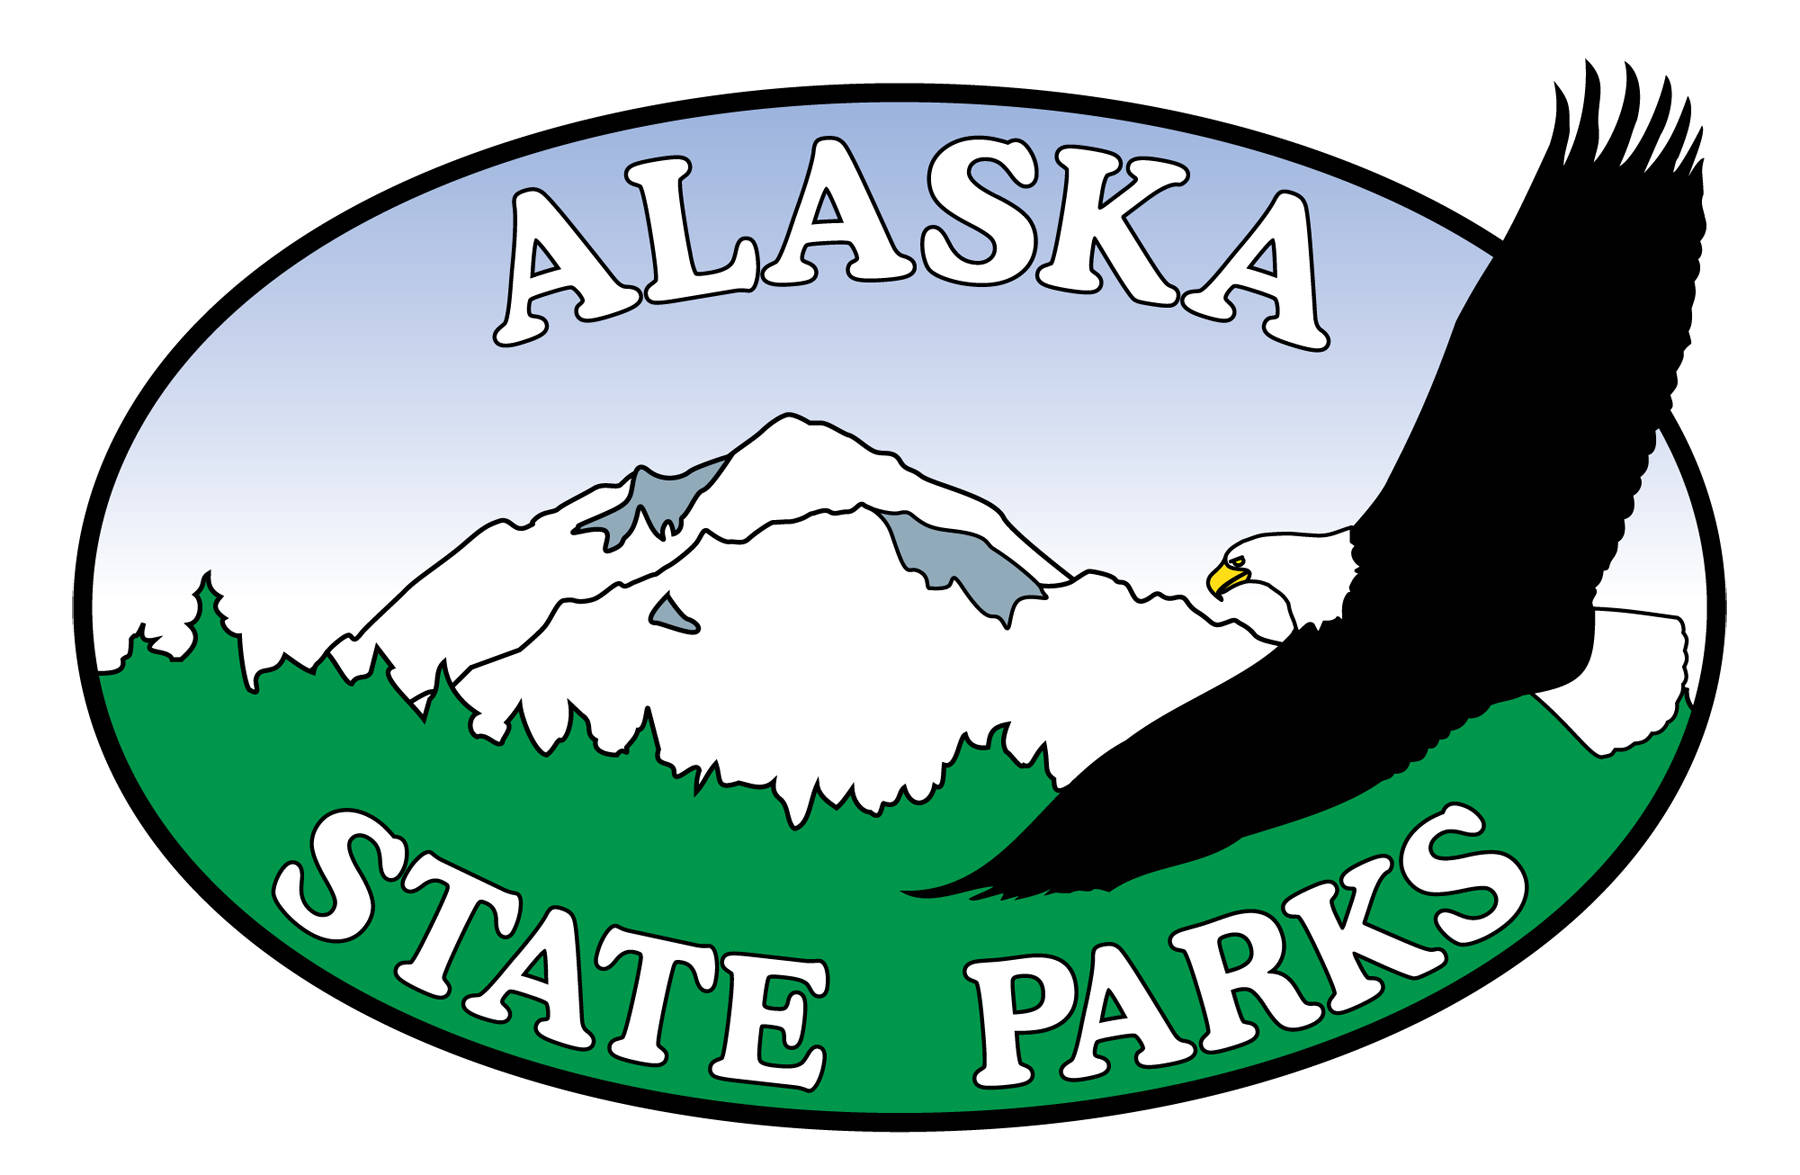 Alaska State Parks logo. (Image courtesy Alaska State Parks)